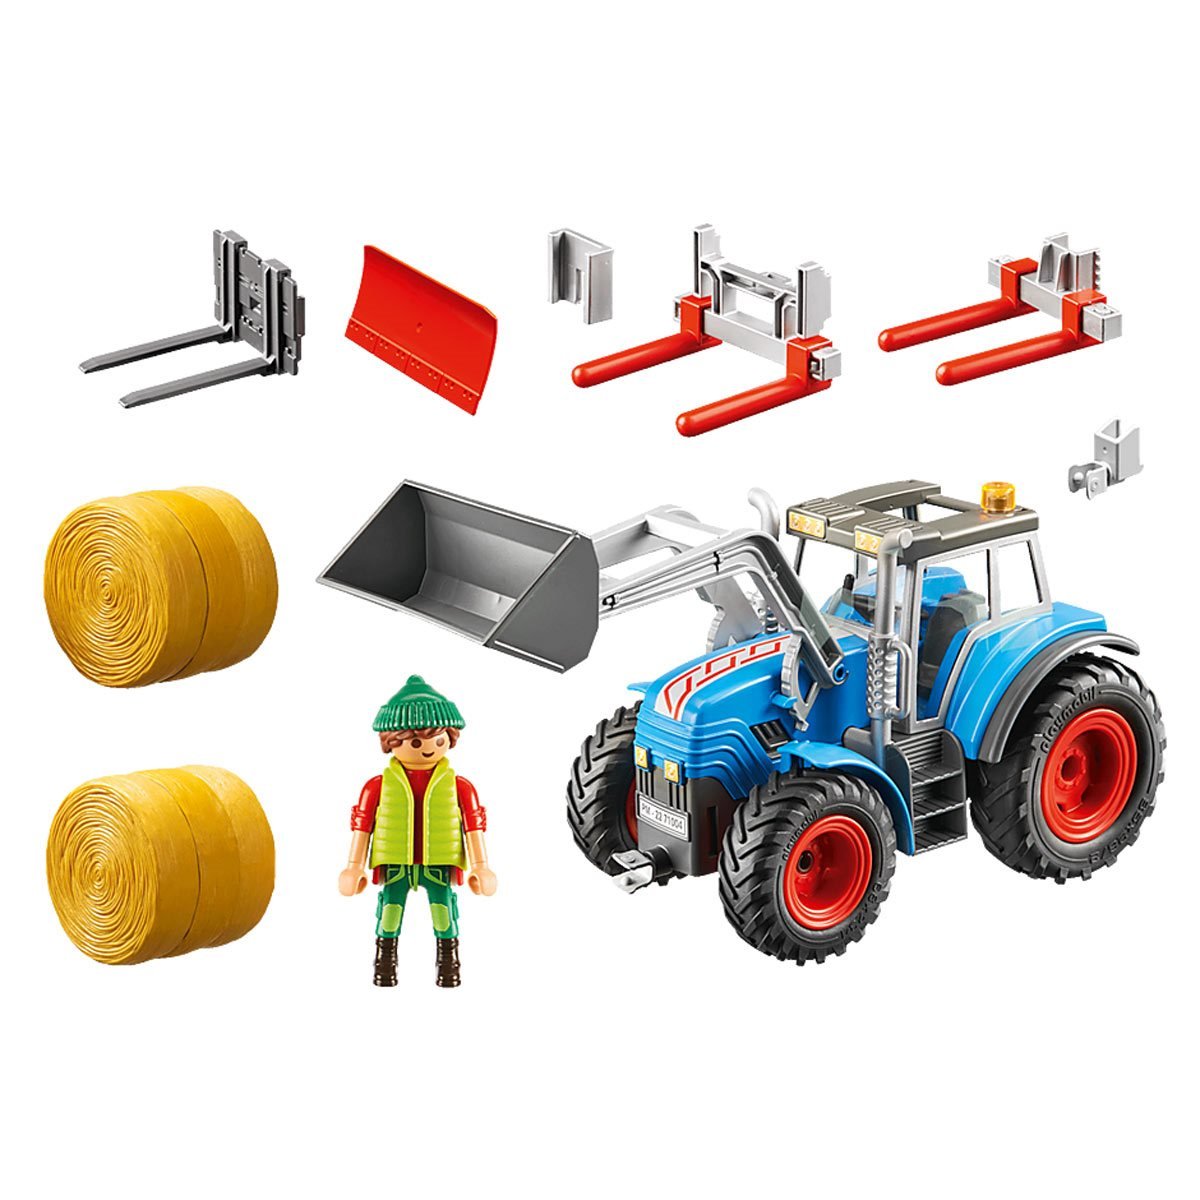 Farm Barn and Tractor - Playmobil Farmers 3554